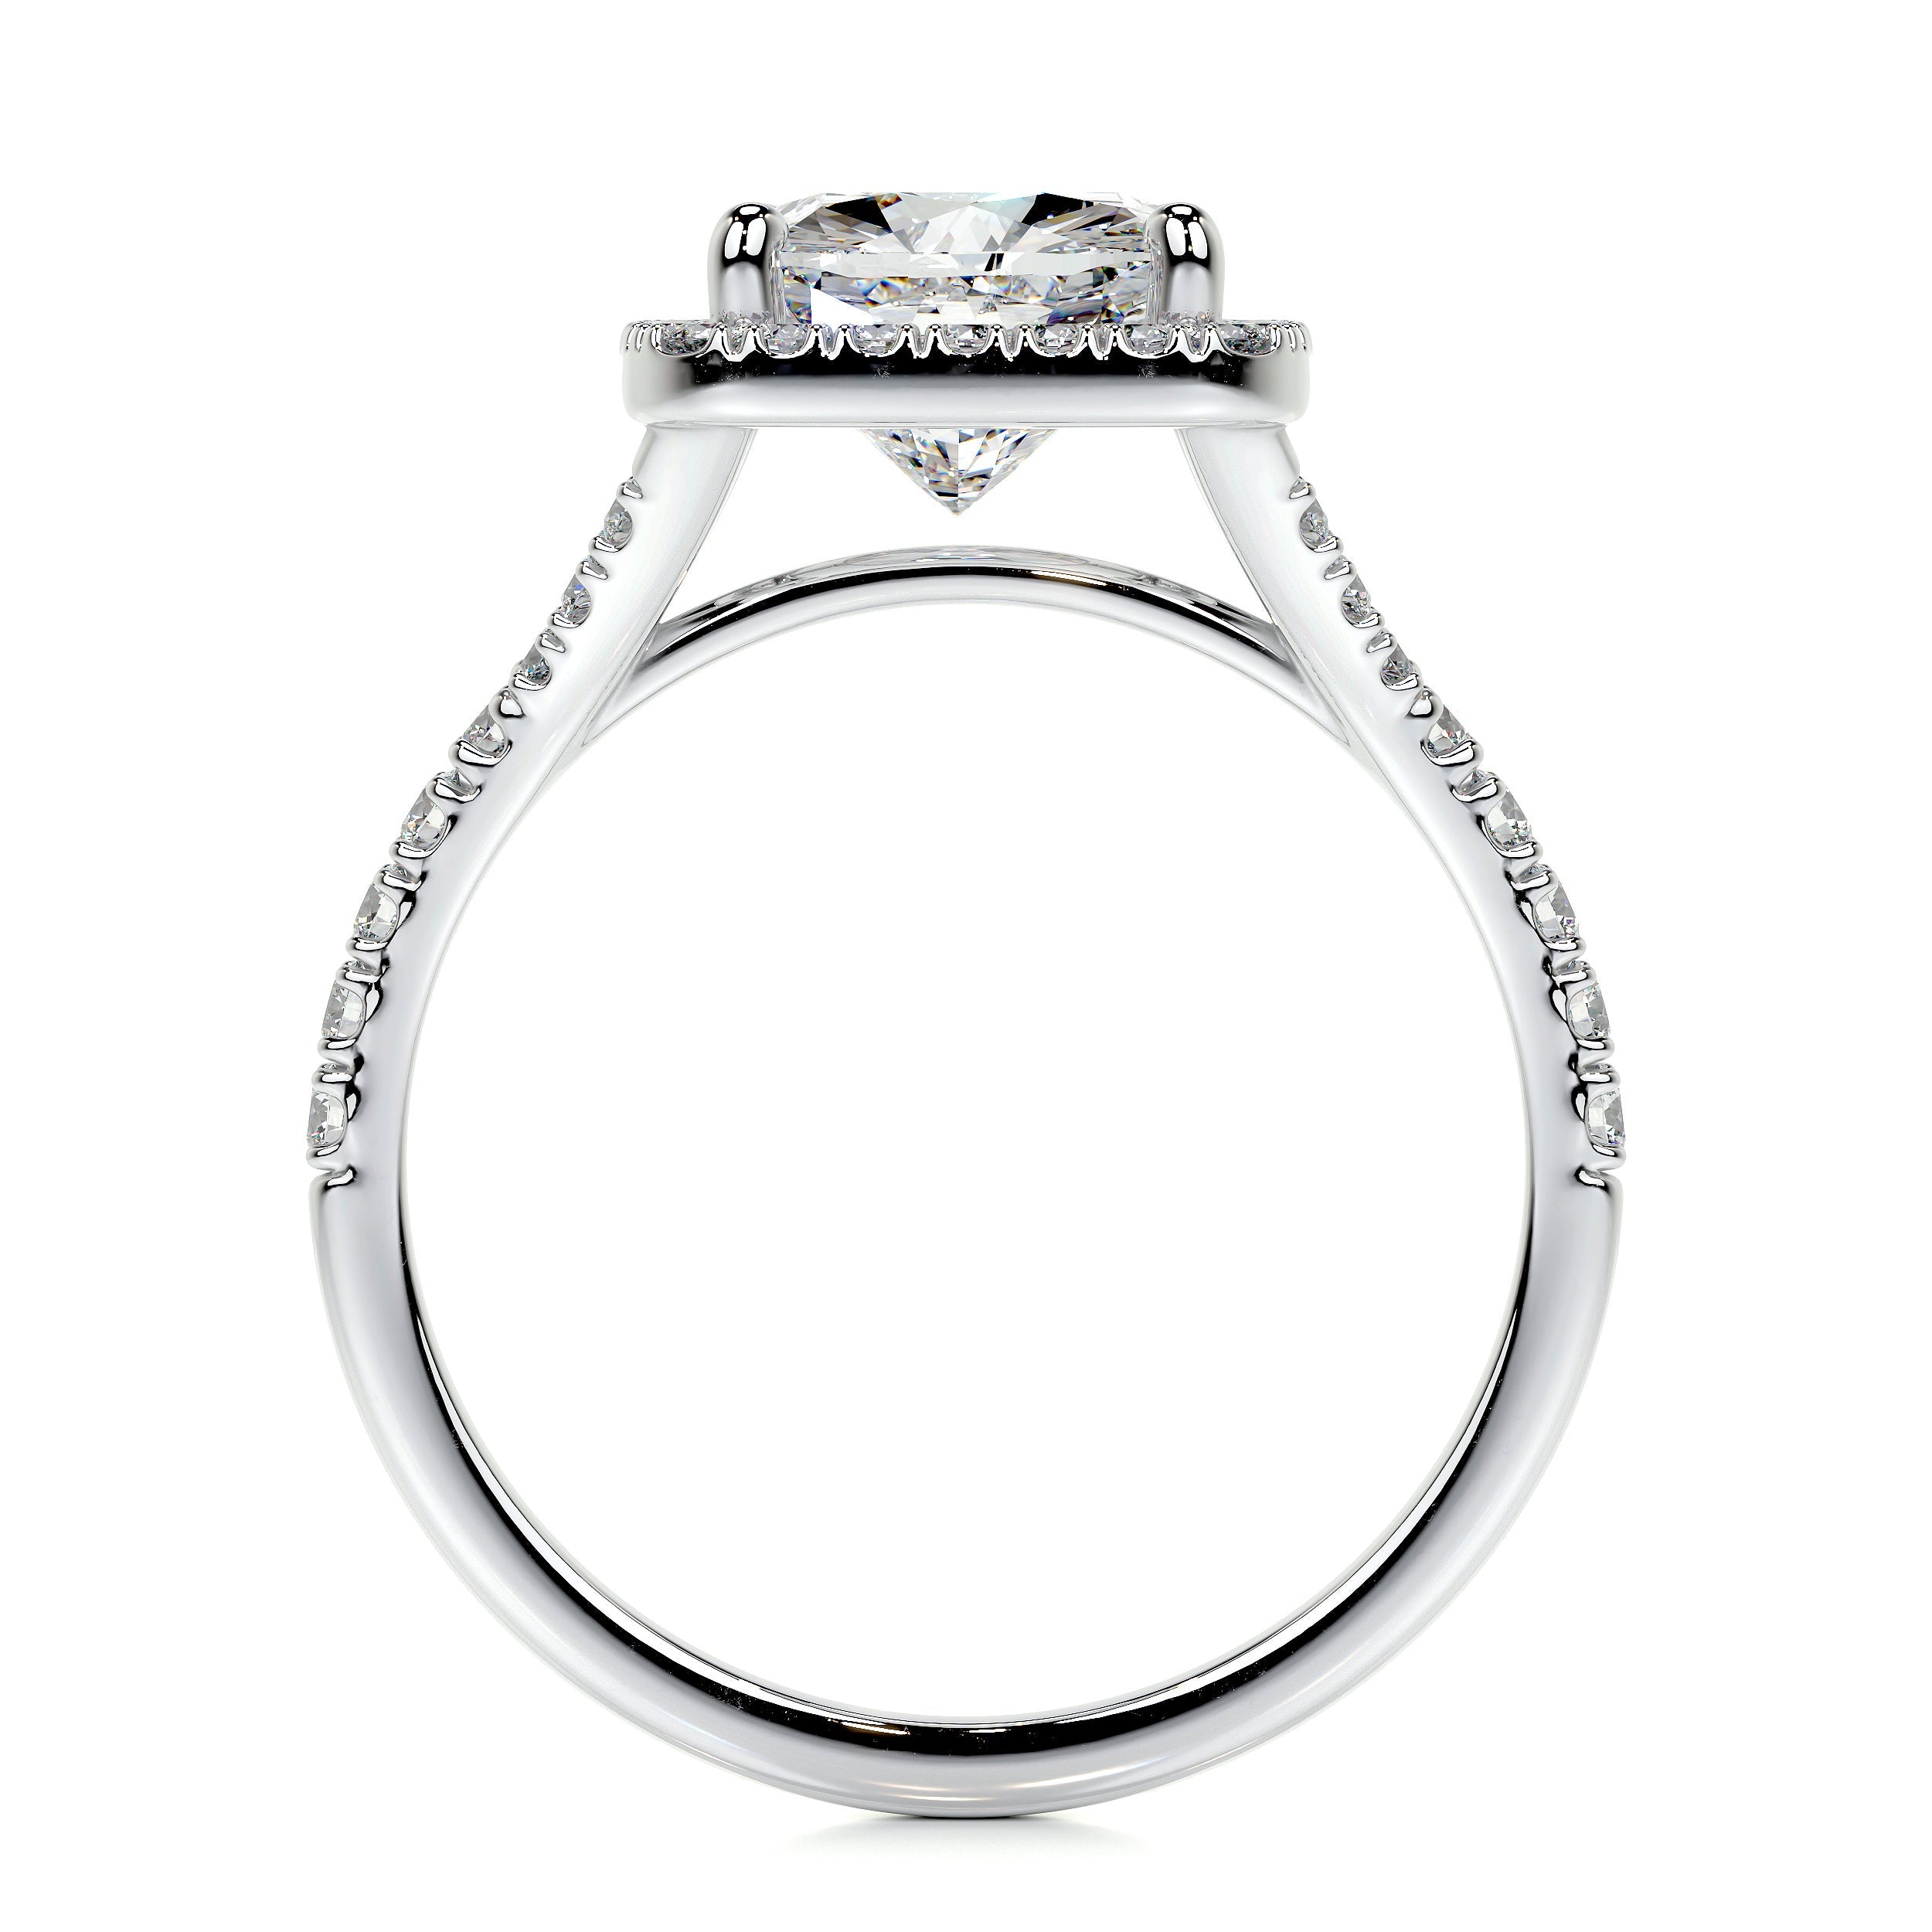 Luciana Lab Grown Diamond Ring   (3 Carat) -18K White Gold